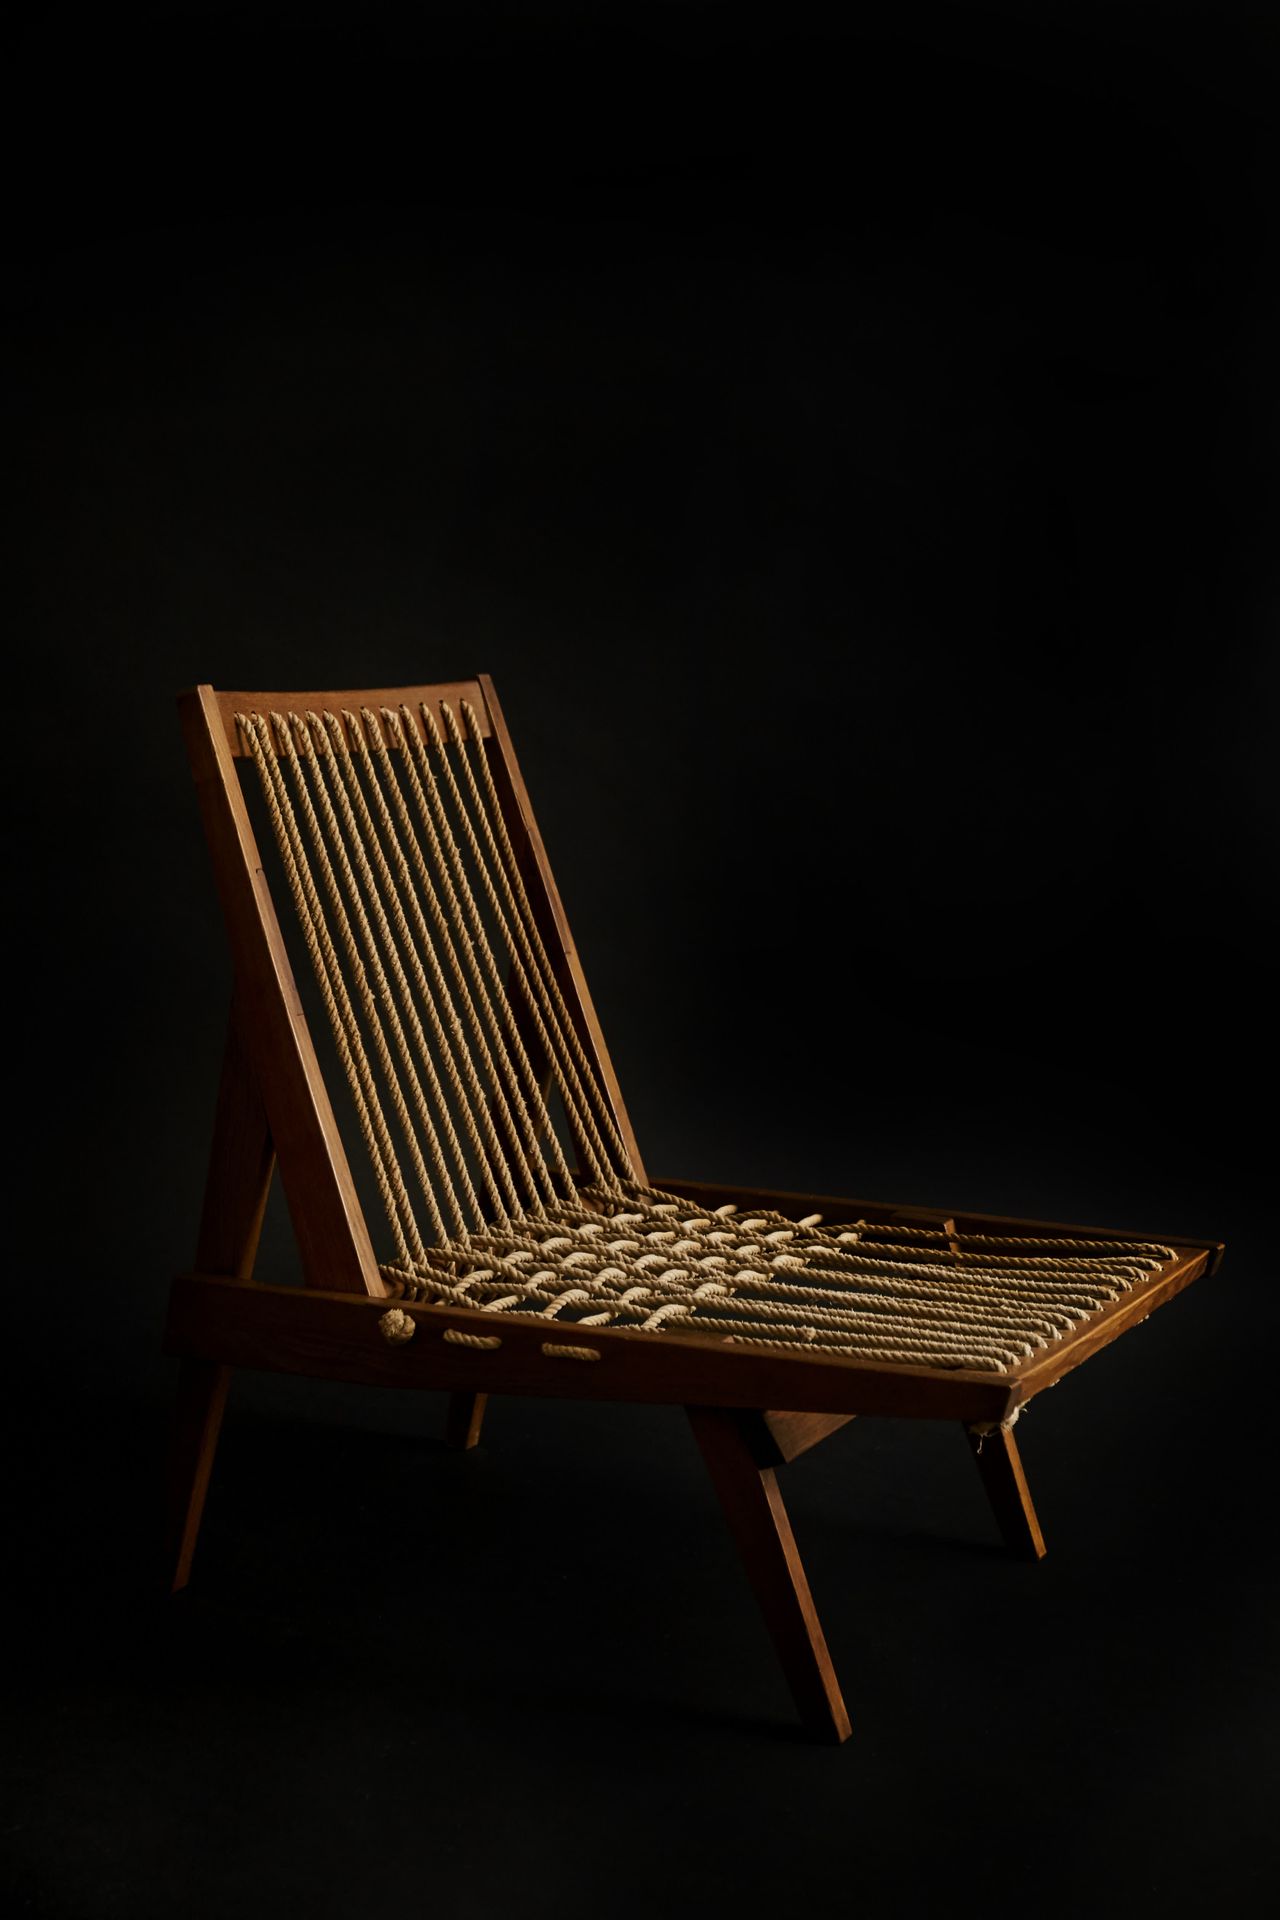 RIKI WATANABE Rope chair•••Chauffeuse
 Chêne et corde
1952
H 72.5 L53.5 P80 cm